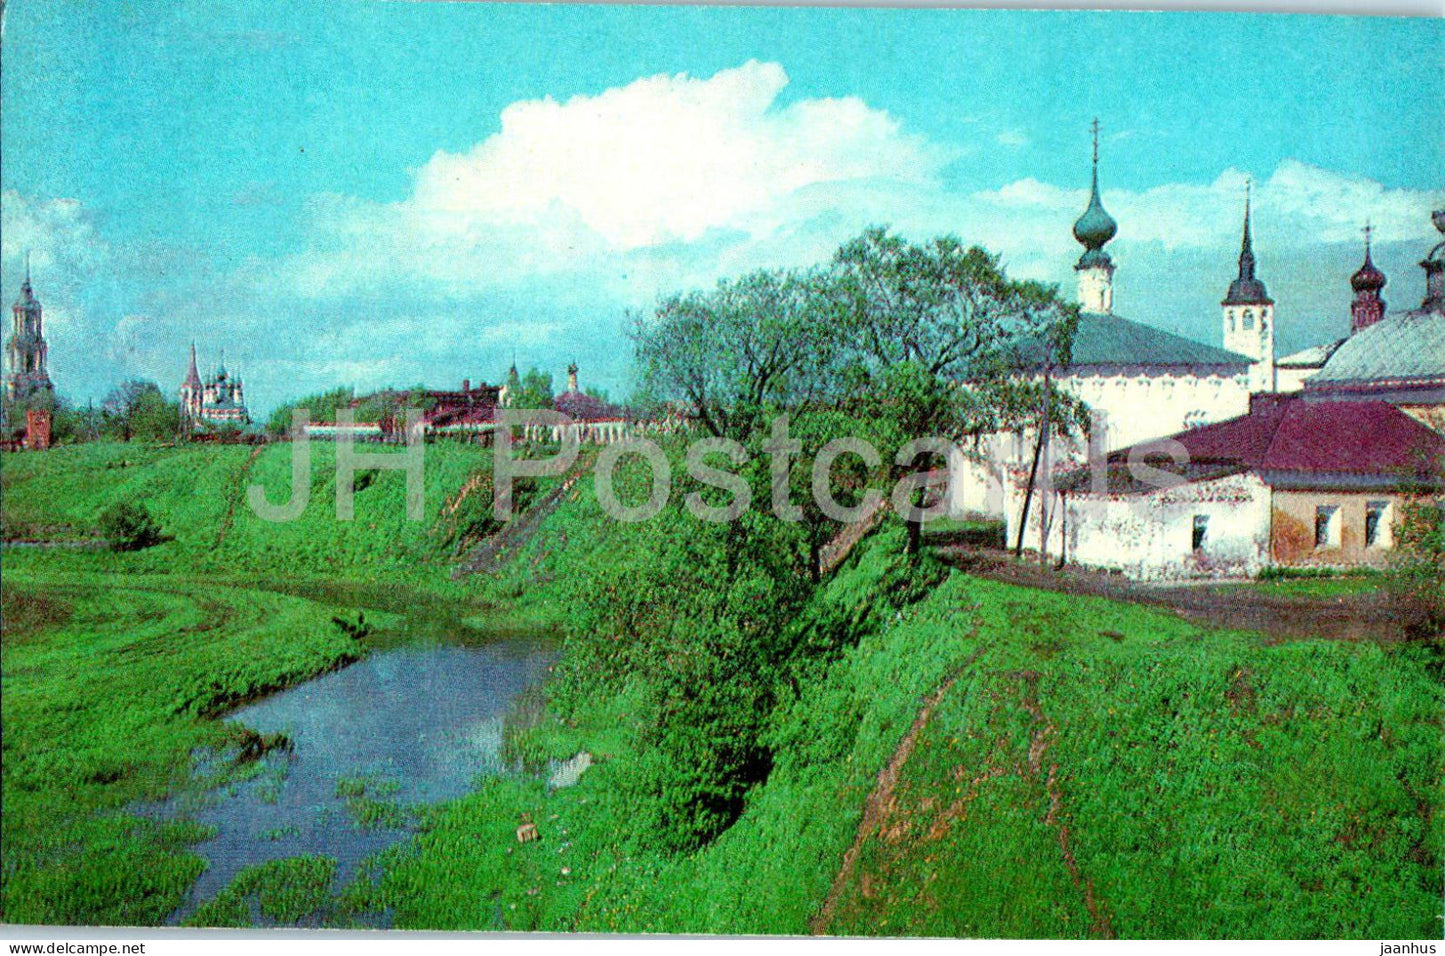 Suzdal - Church of the Entry into Jerusalem and Pyatnitskaya Church - 1979 - Russia USSR - unused - JH Postcards